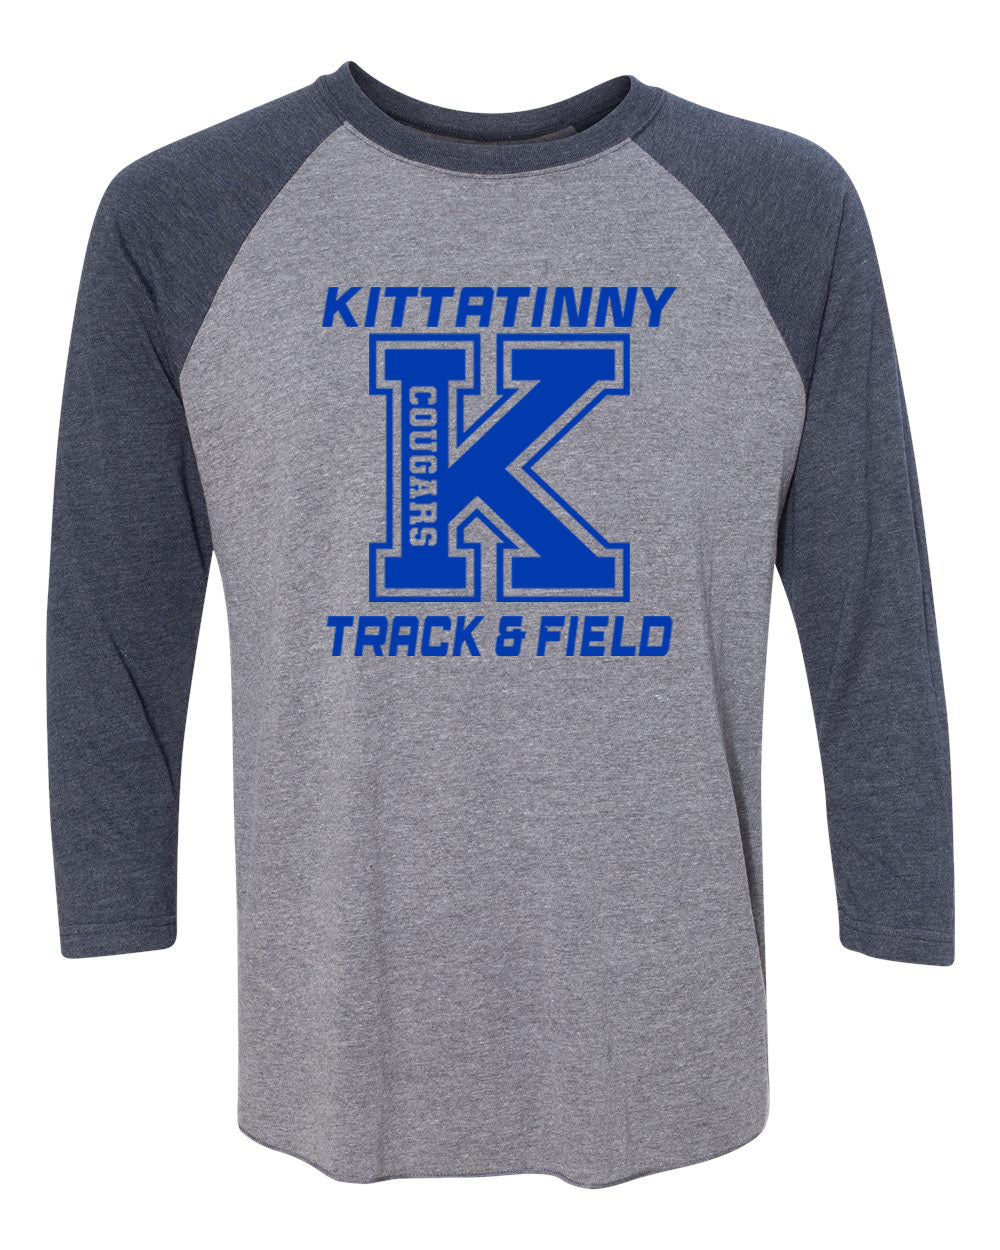 Kittatinny Track Design 3 raglan shirt